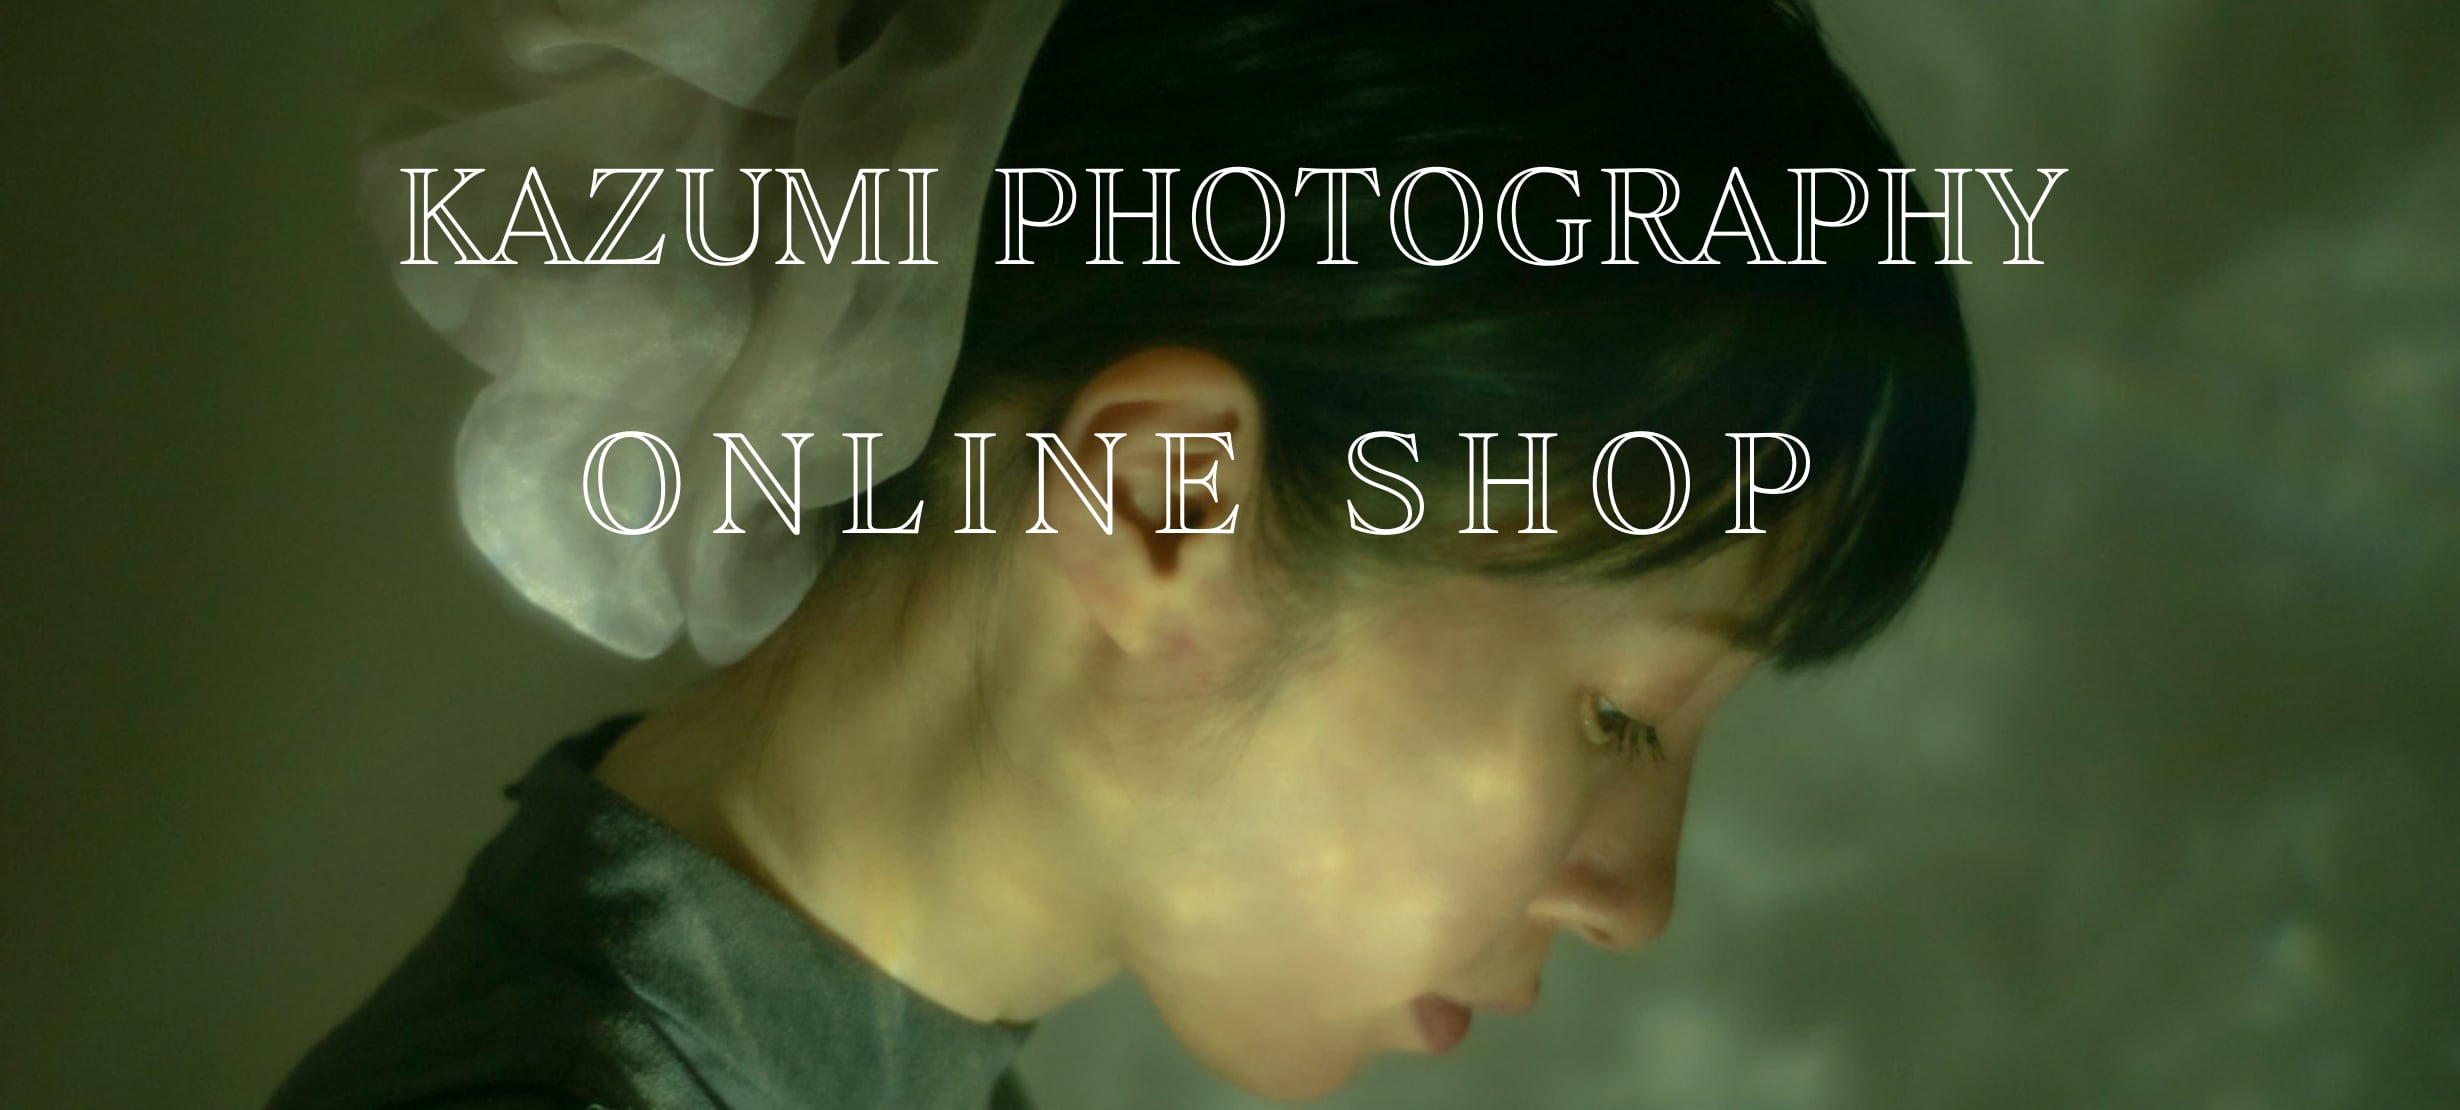 KAZUMI PHOTOGRAHPY ONLINE SHOP